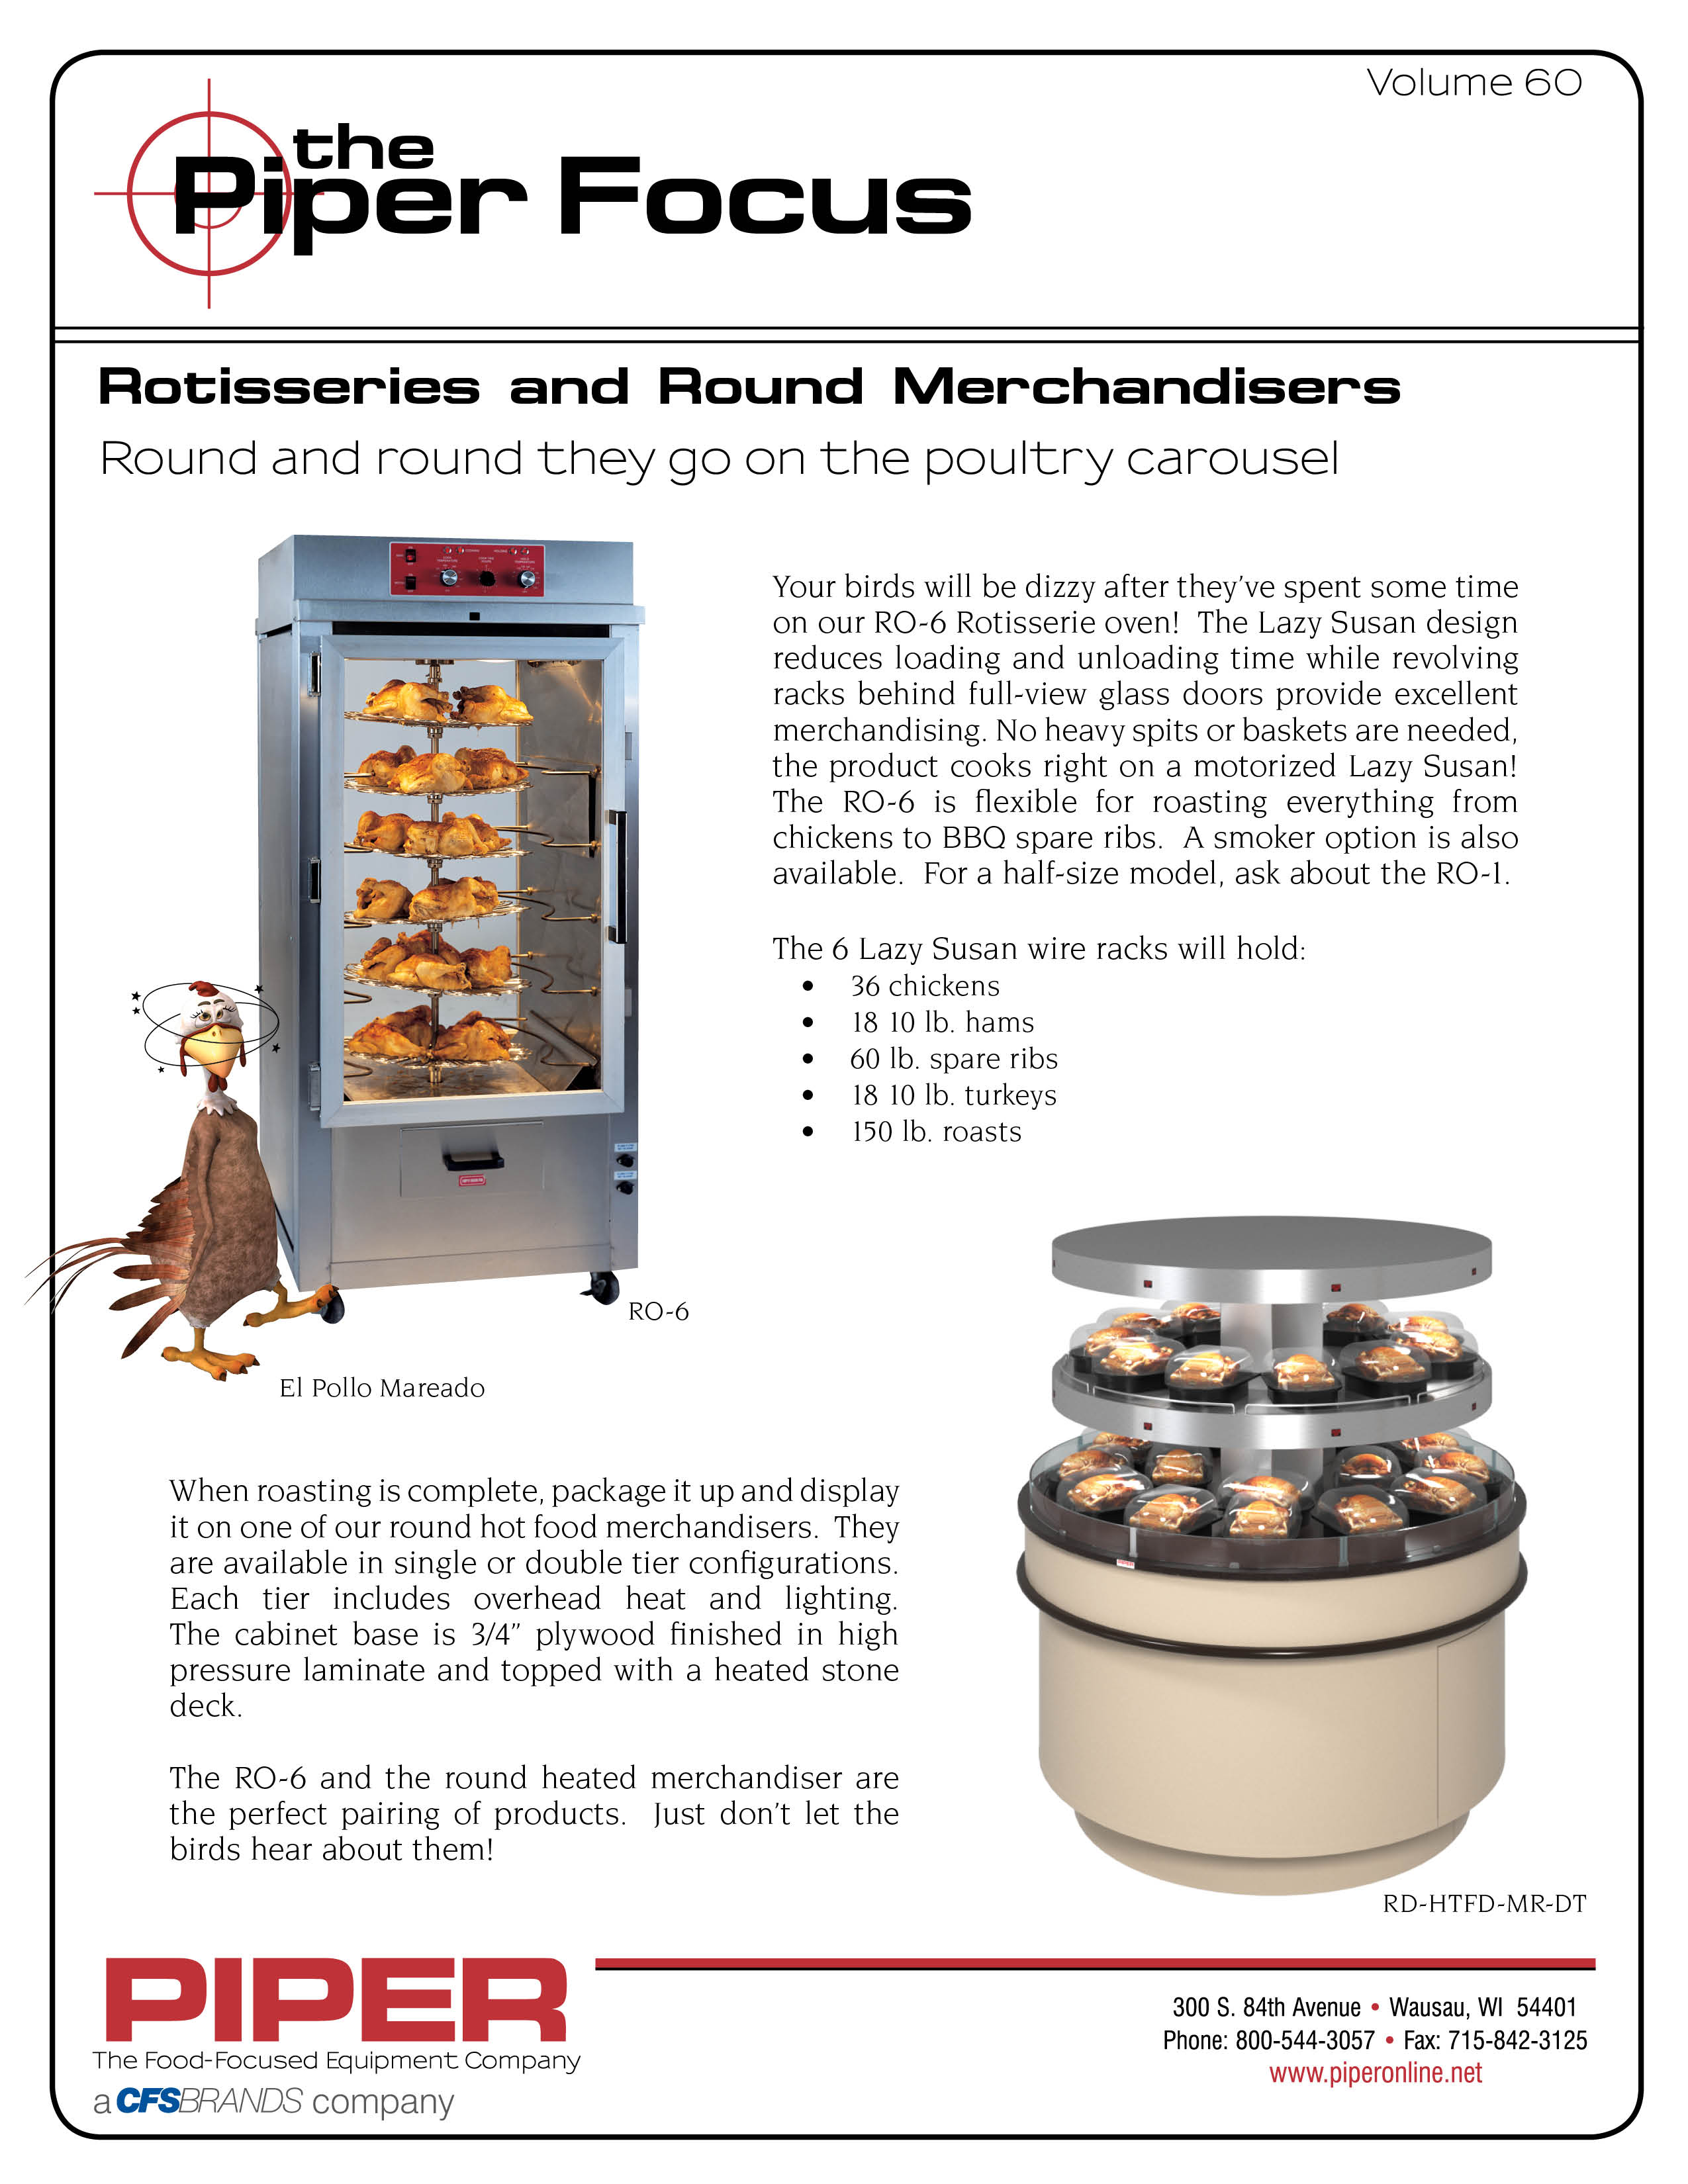 Piper Focus  - Rotisseries and Round Merchandisers